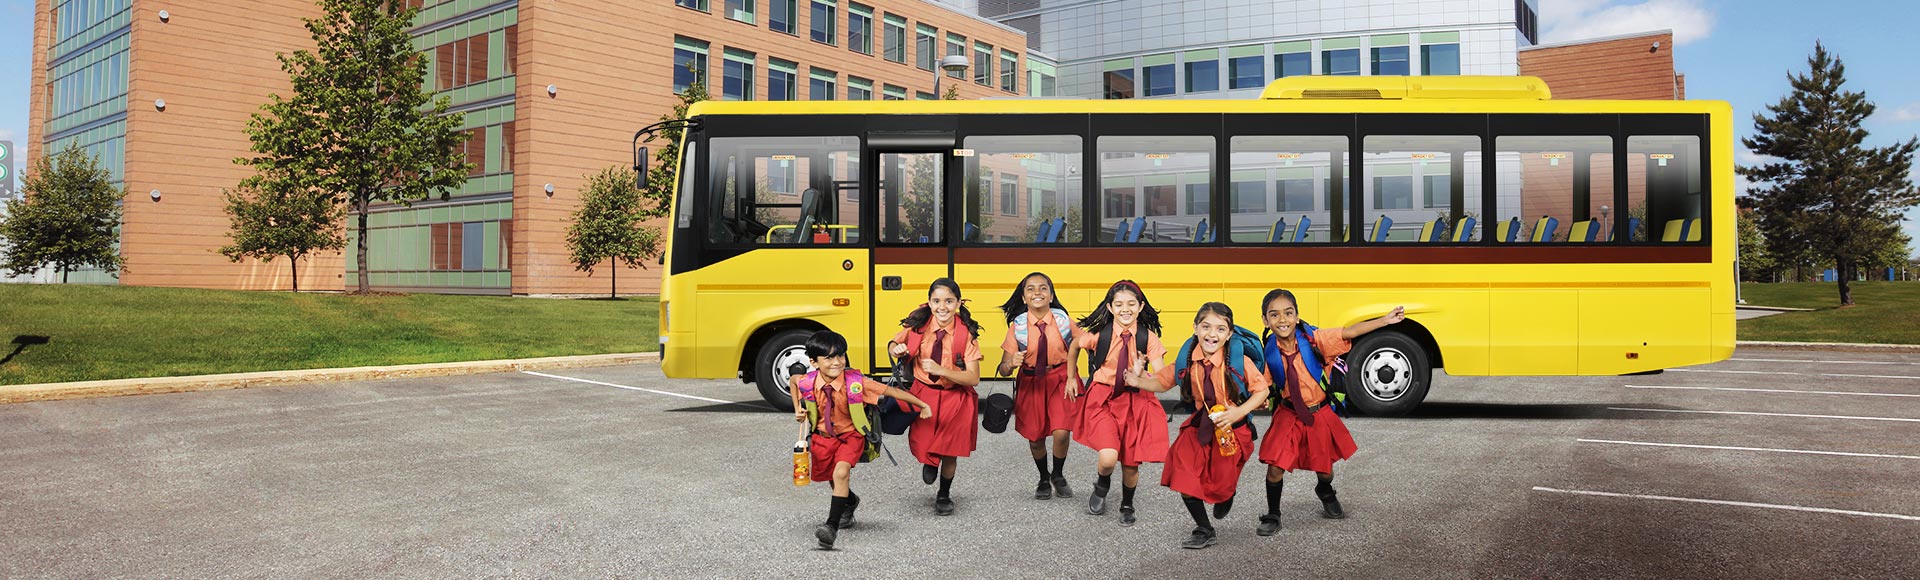 Best School Bus Children Bus For Schools Picnics Safe